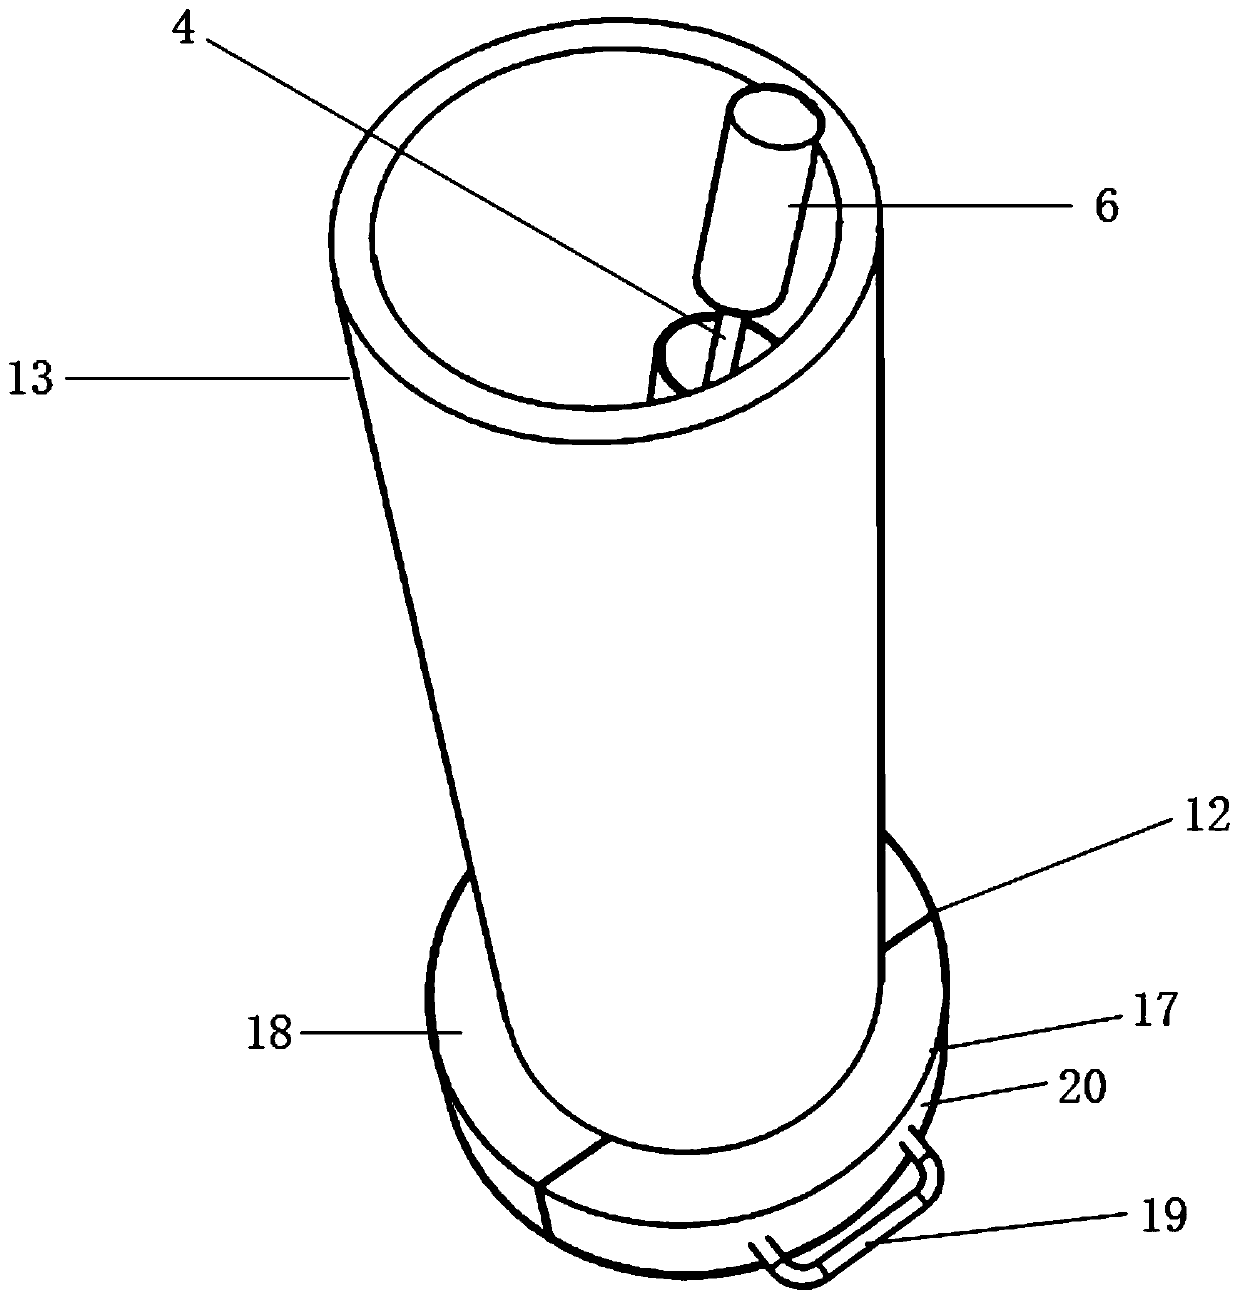 Combined structure of umbrella and umbrella tube